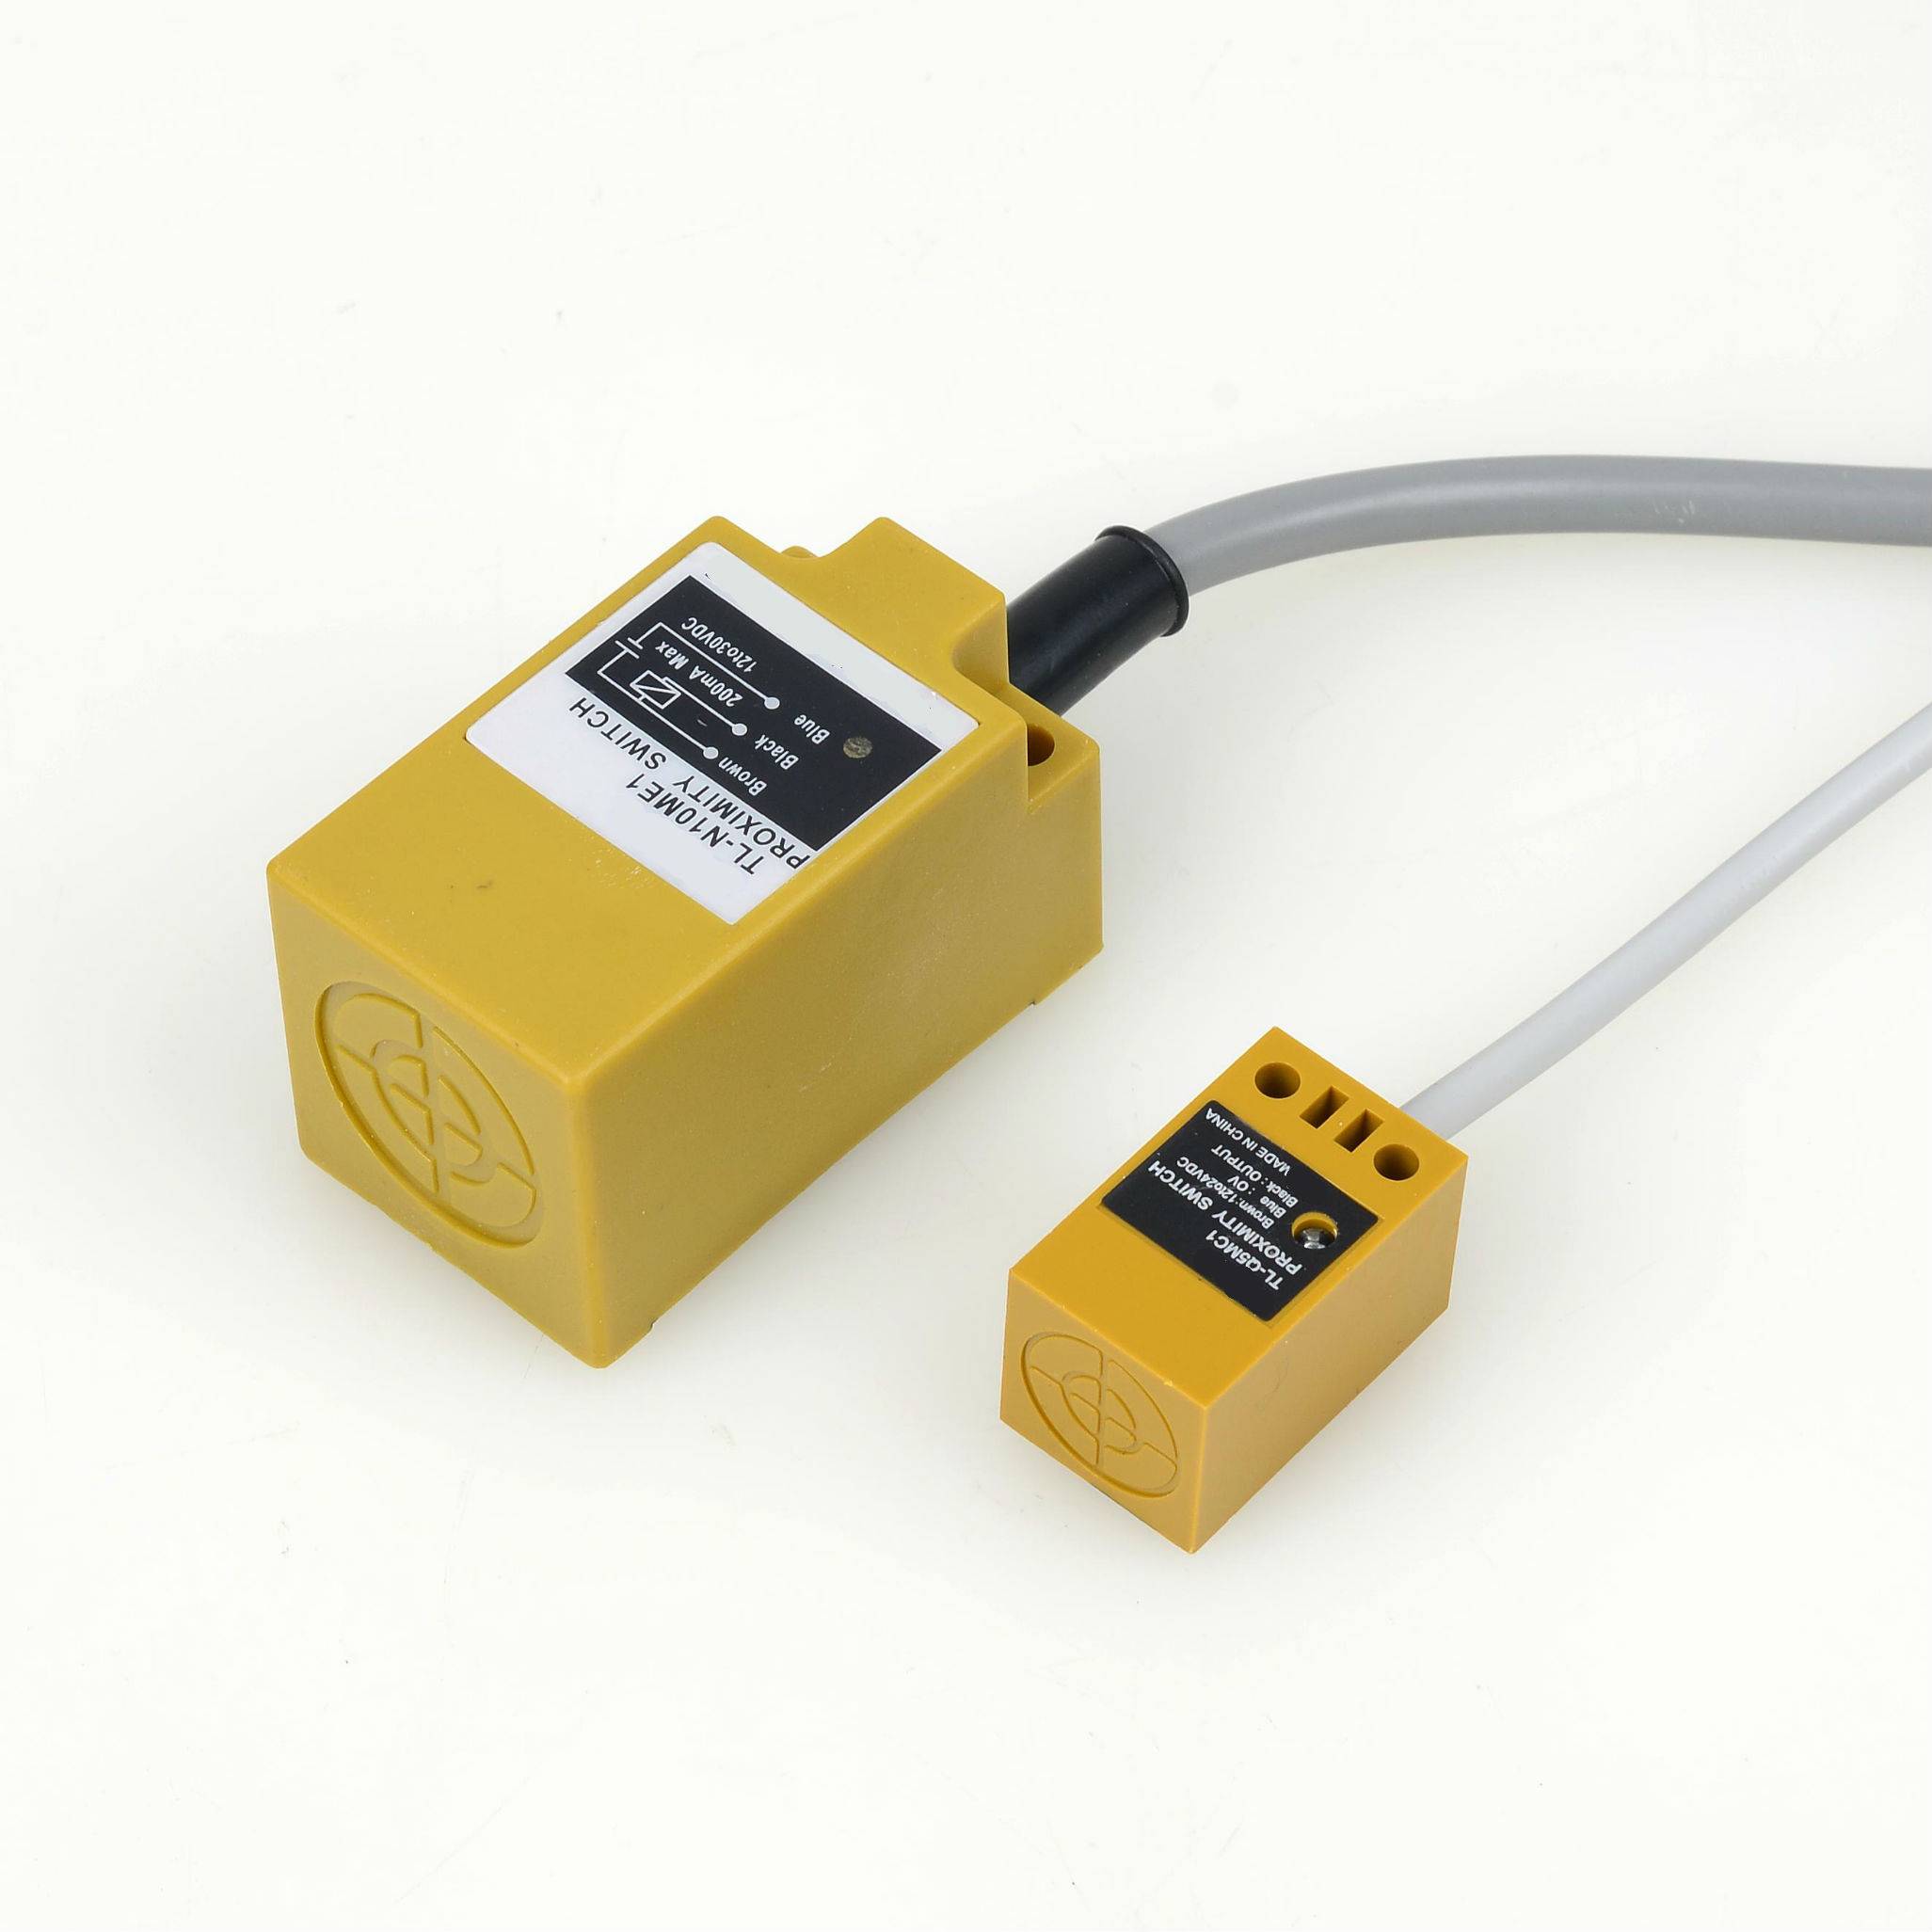 TL-N20ME1   proximity switch square sensor